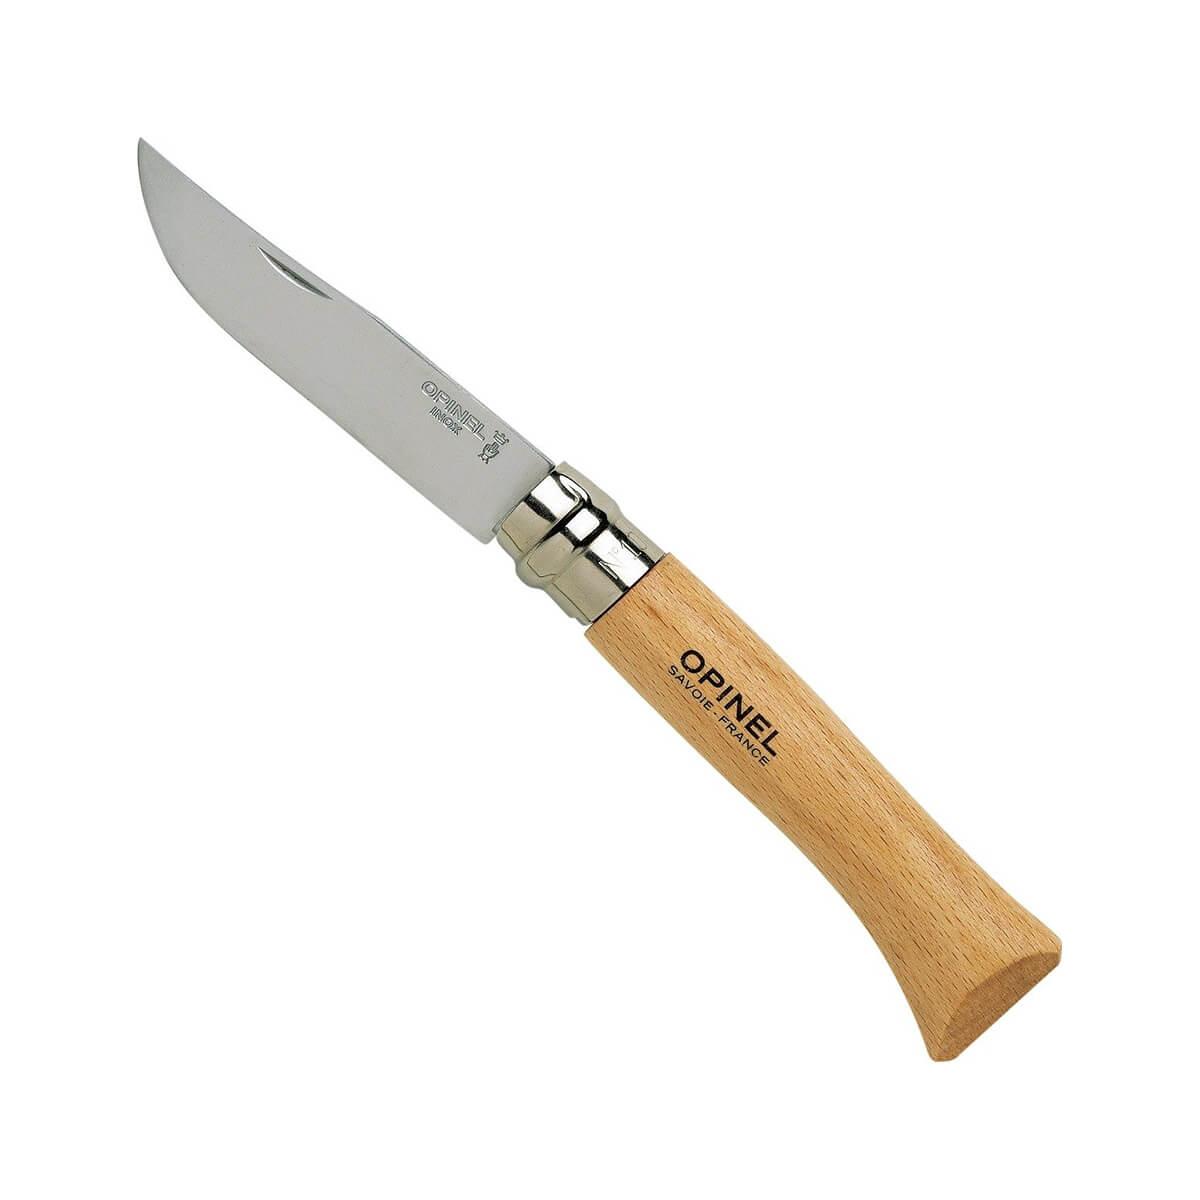  No.10 Beechwood Stainless Steel Folding Knife